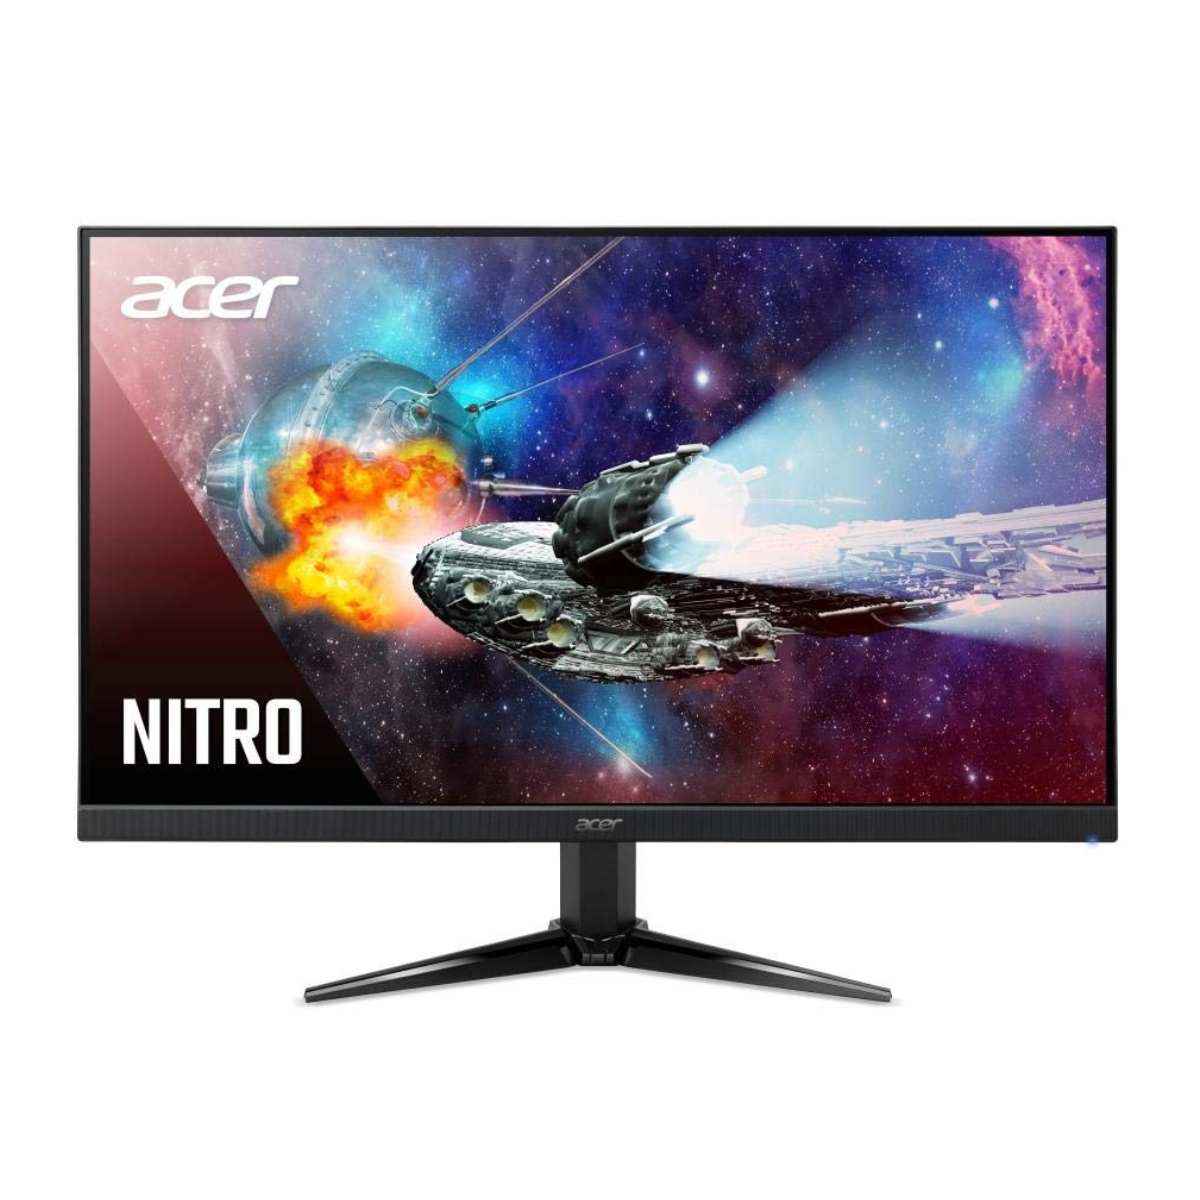 एसर Nitro QG221Q 21.5 इंच Full HD गेमिंग Monitor 